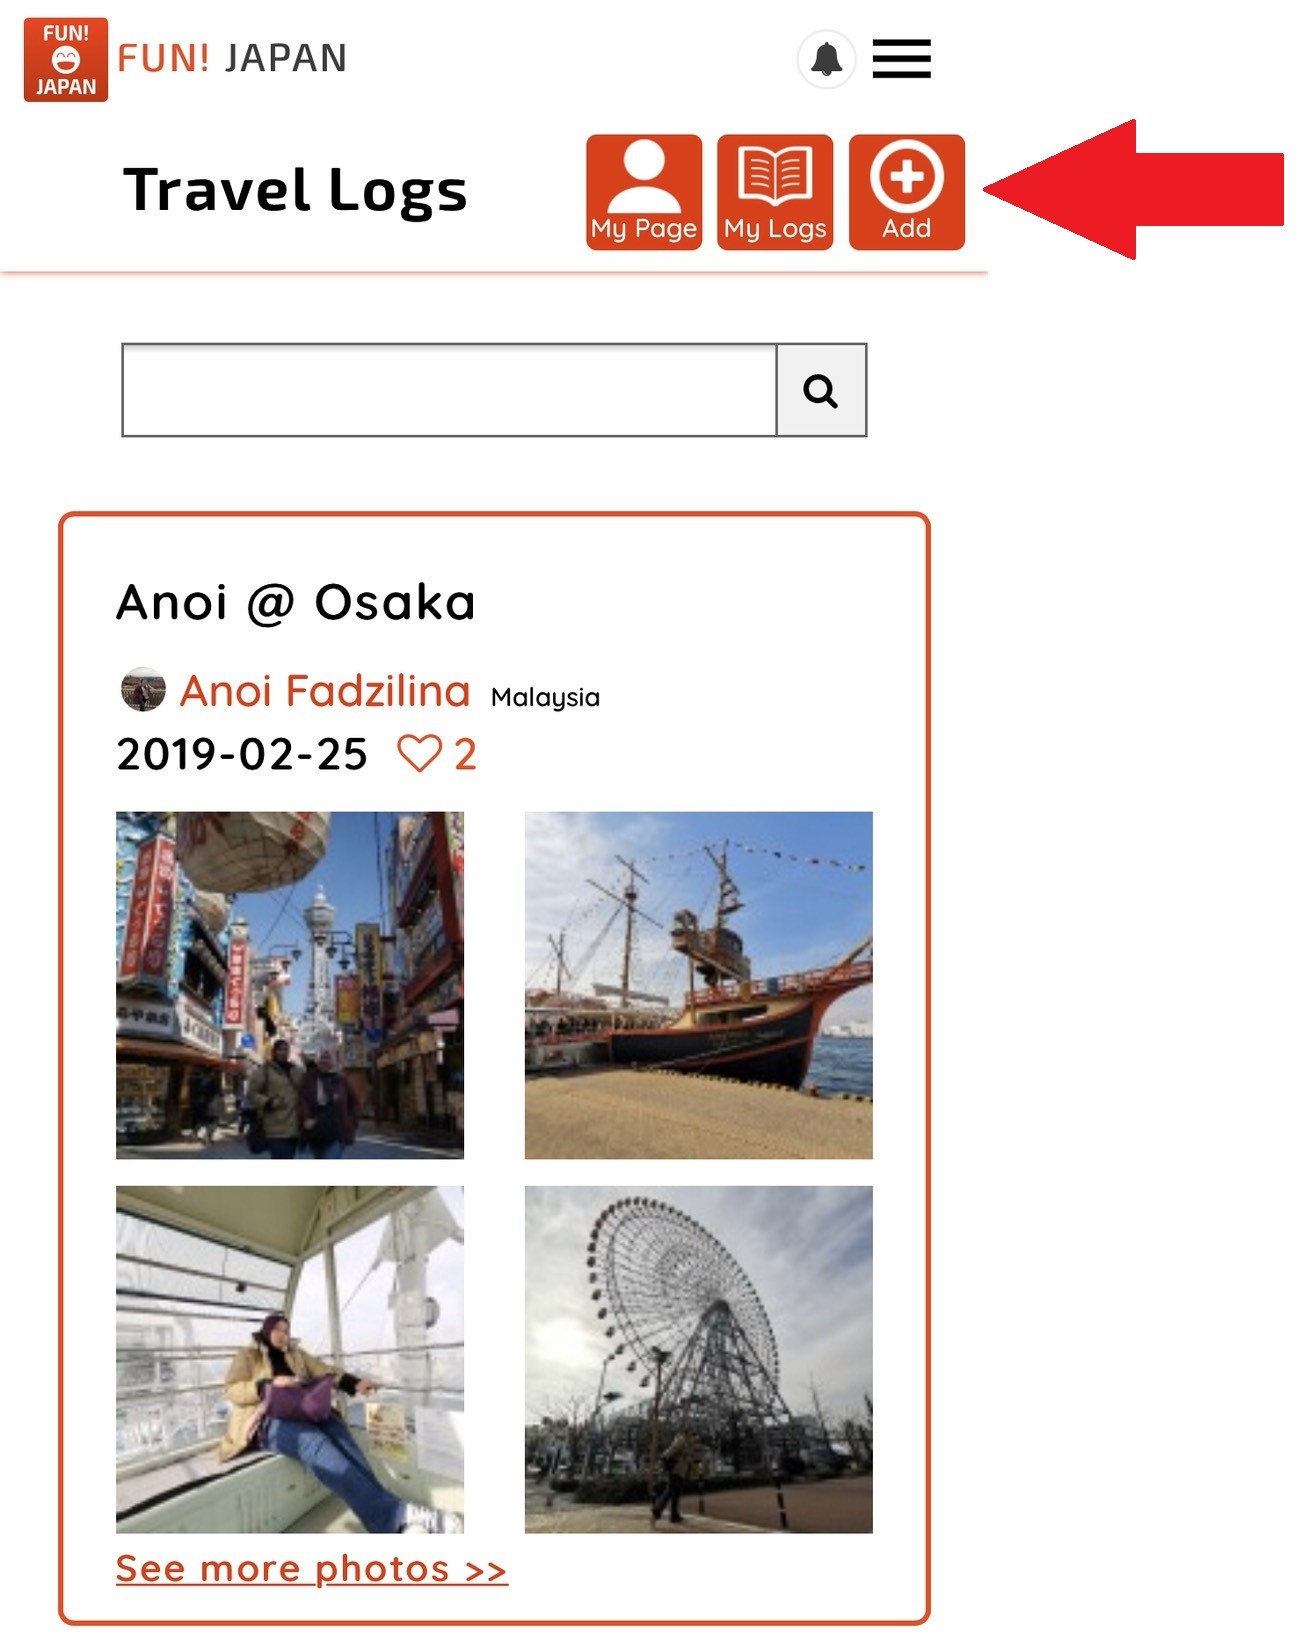 Japan-travel Themed International Exchanges on “FUN! JAPAN Travel Logs!”